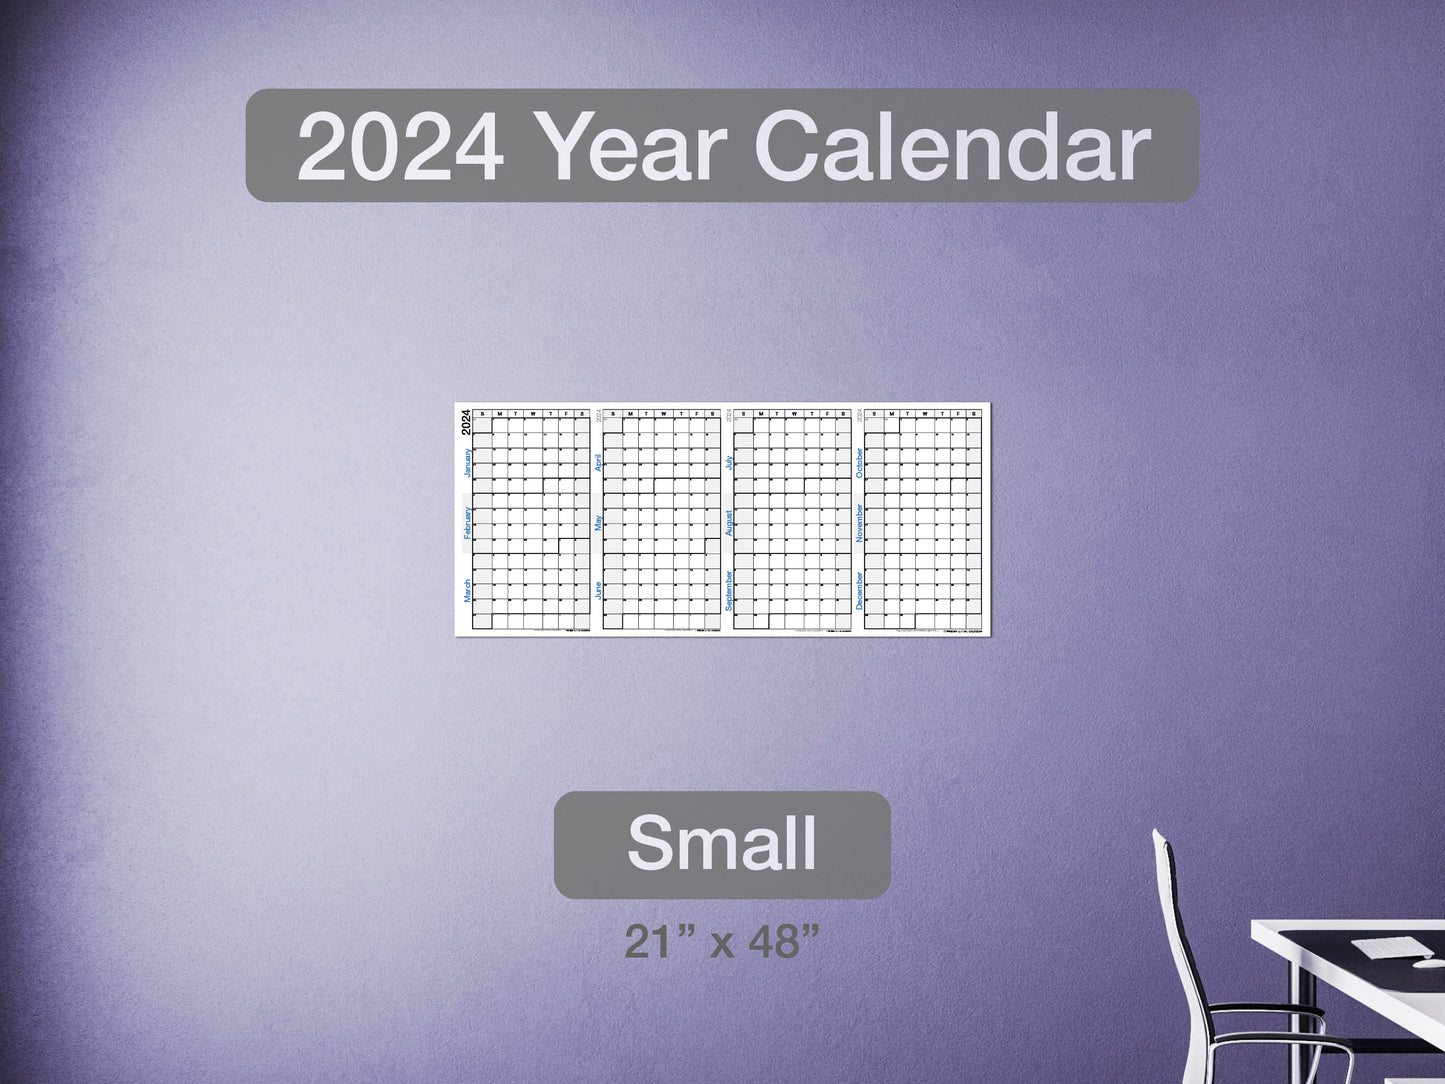 2024 Year Calendar Small